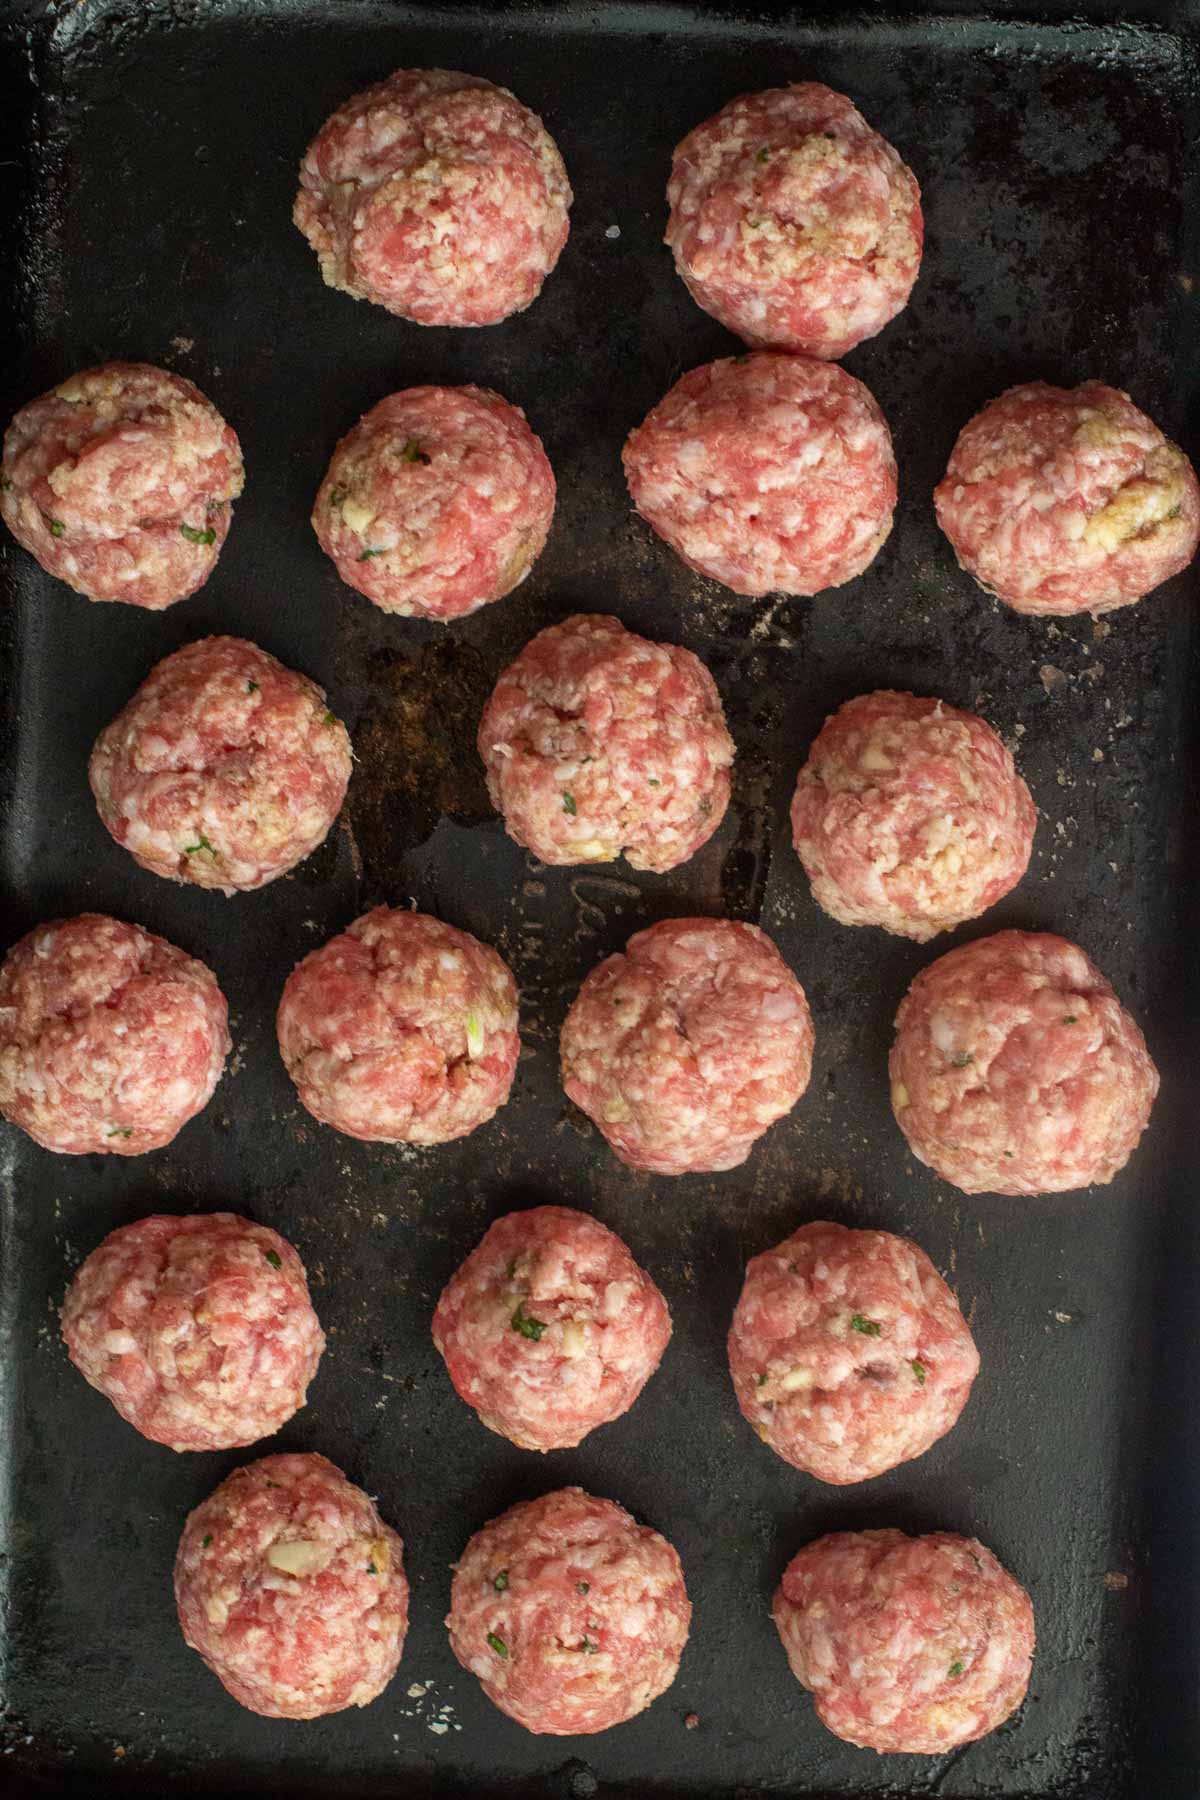 Pork meatballs ready to cook.